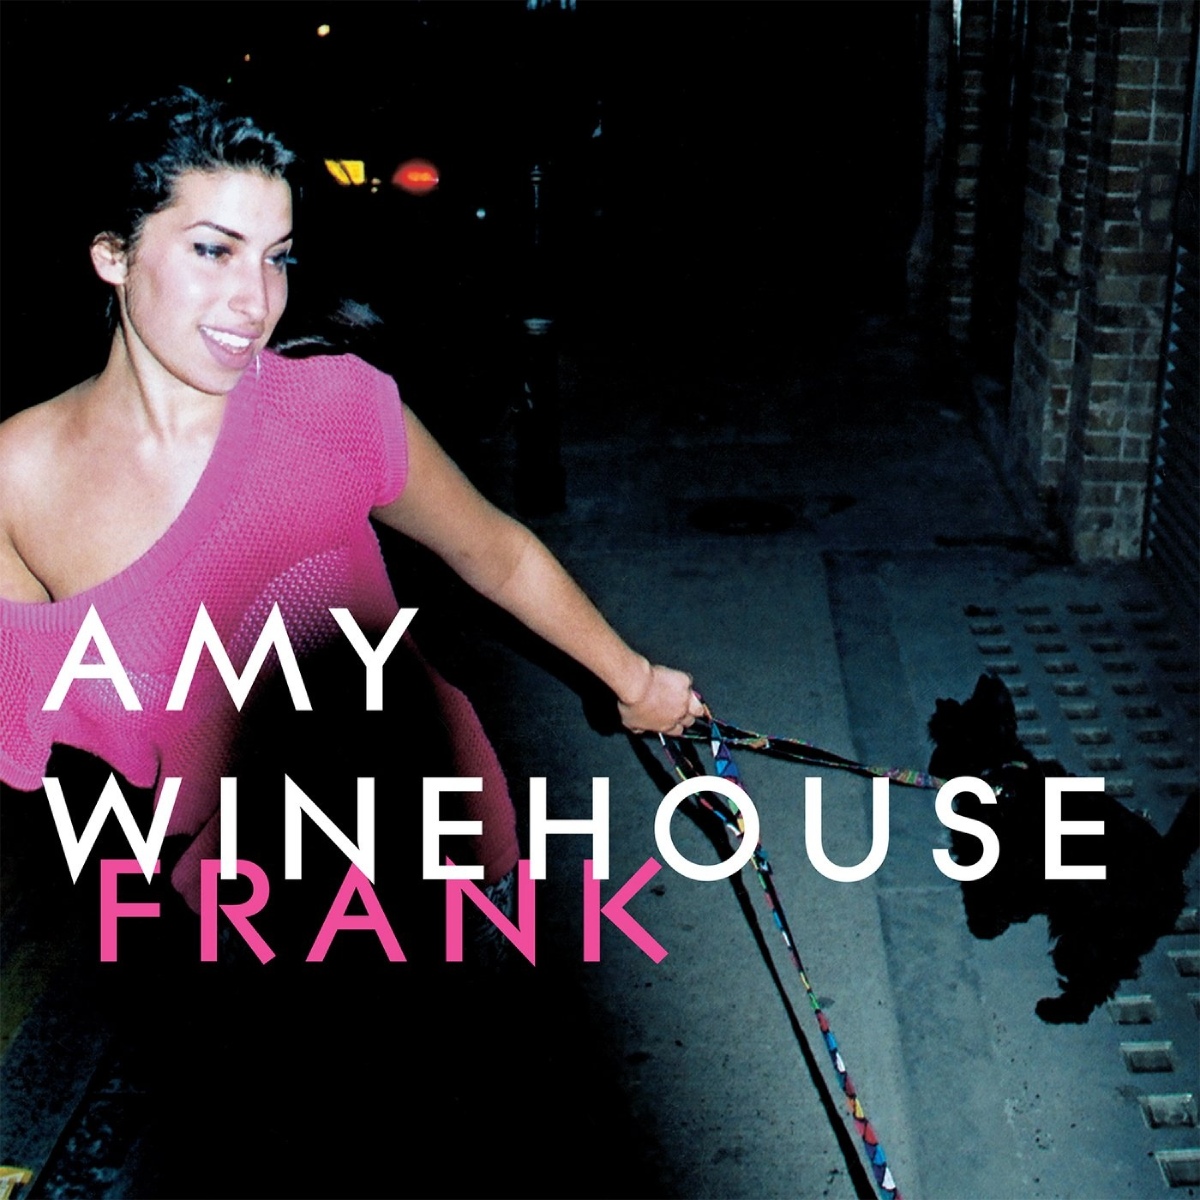 Portada del álbum 'Frank' de Amy Winehouse